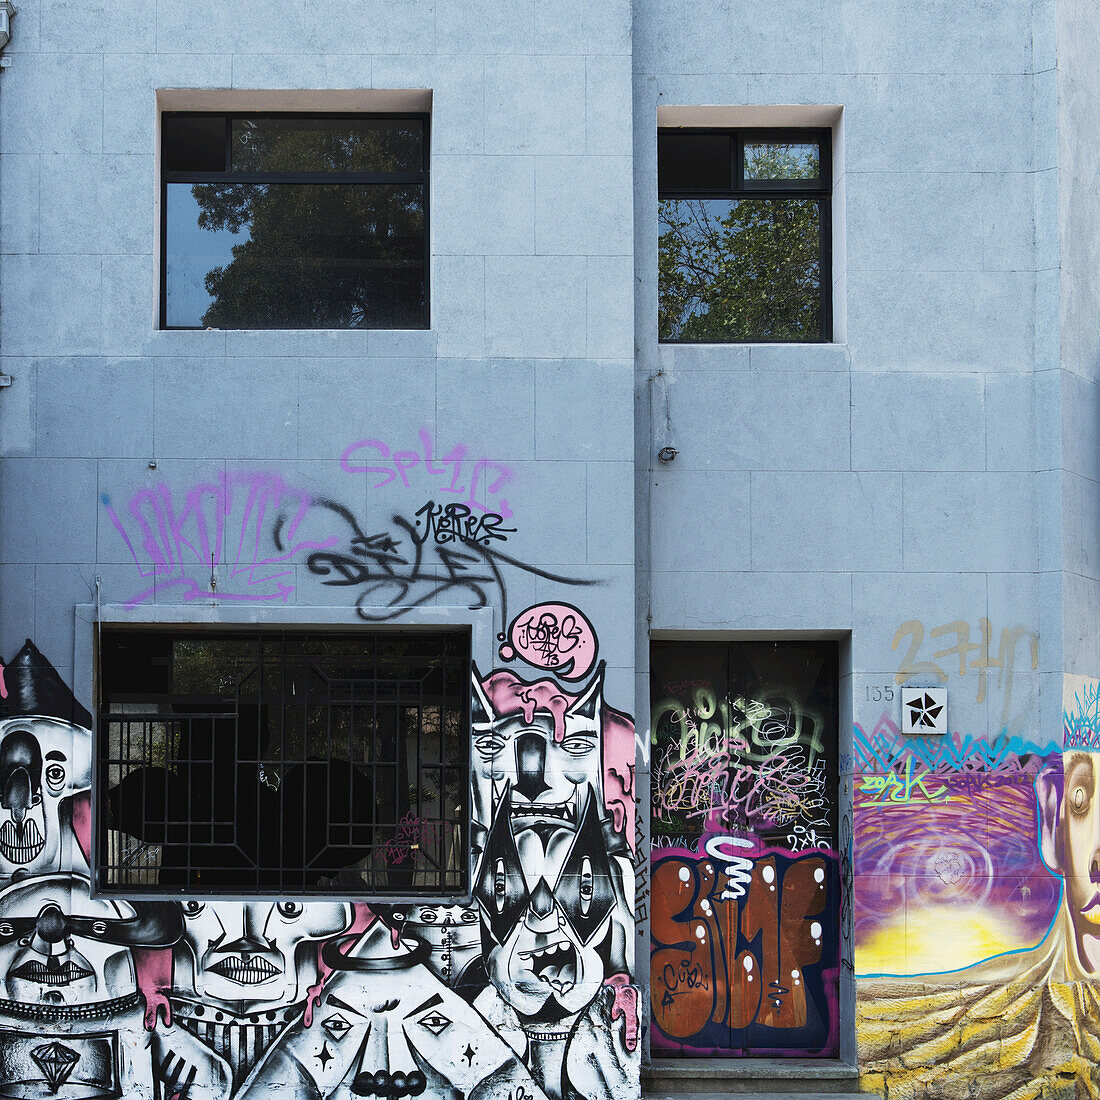 Graffiti And Artwork Painted On Building; Santiago, Santiago Metropolitan Region, Chile